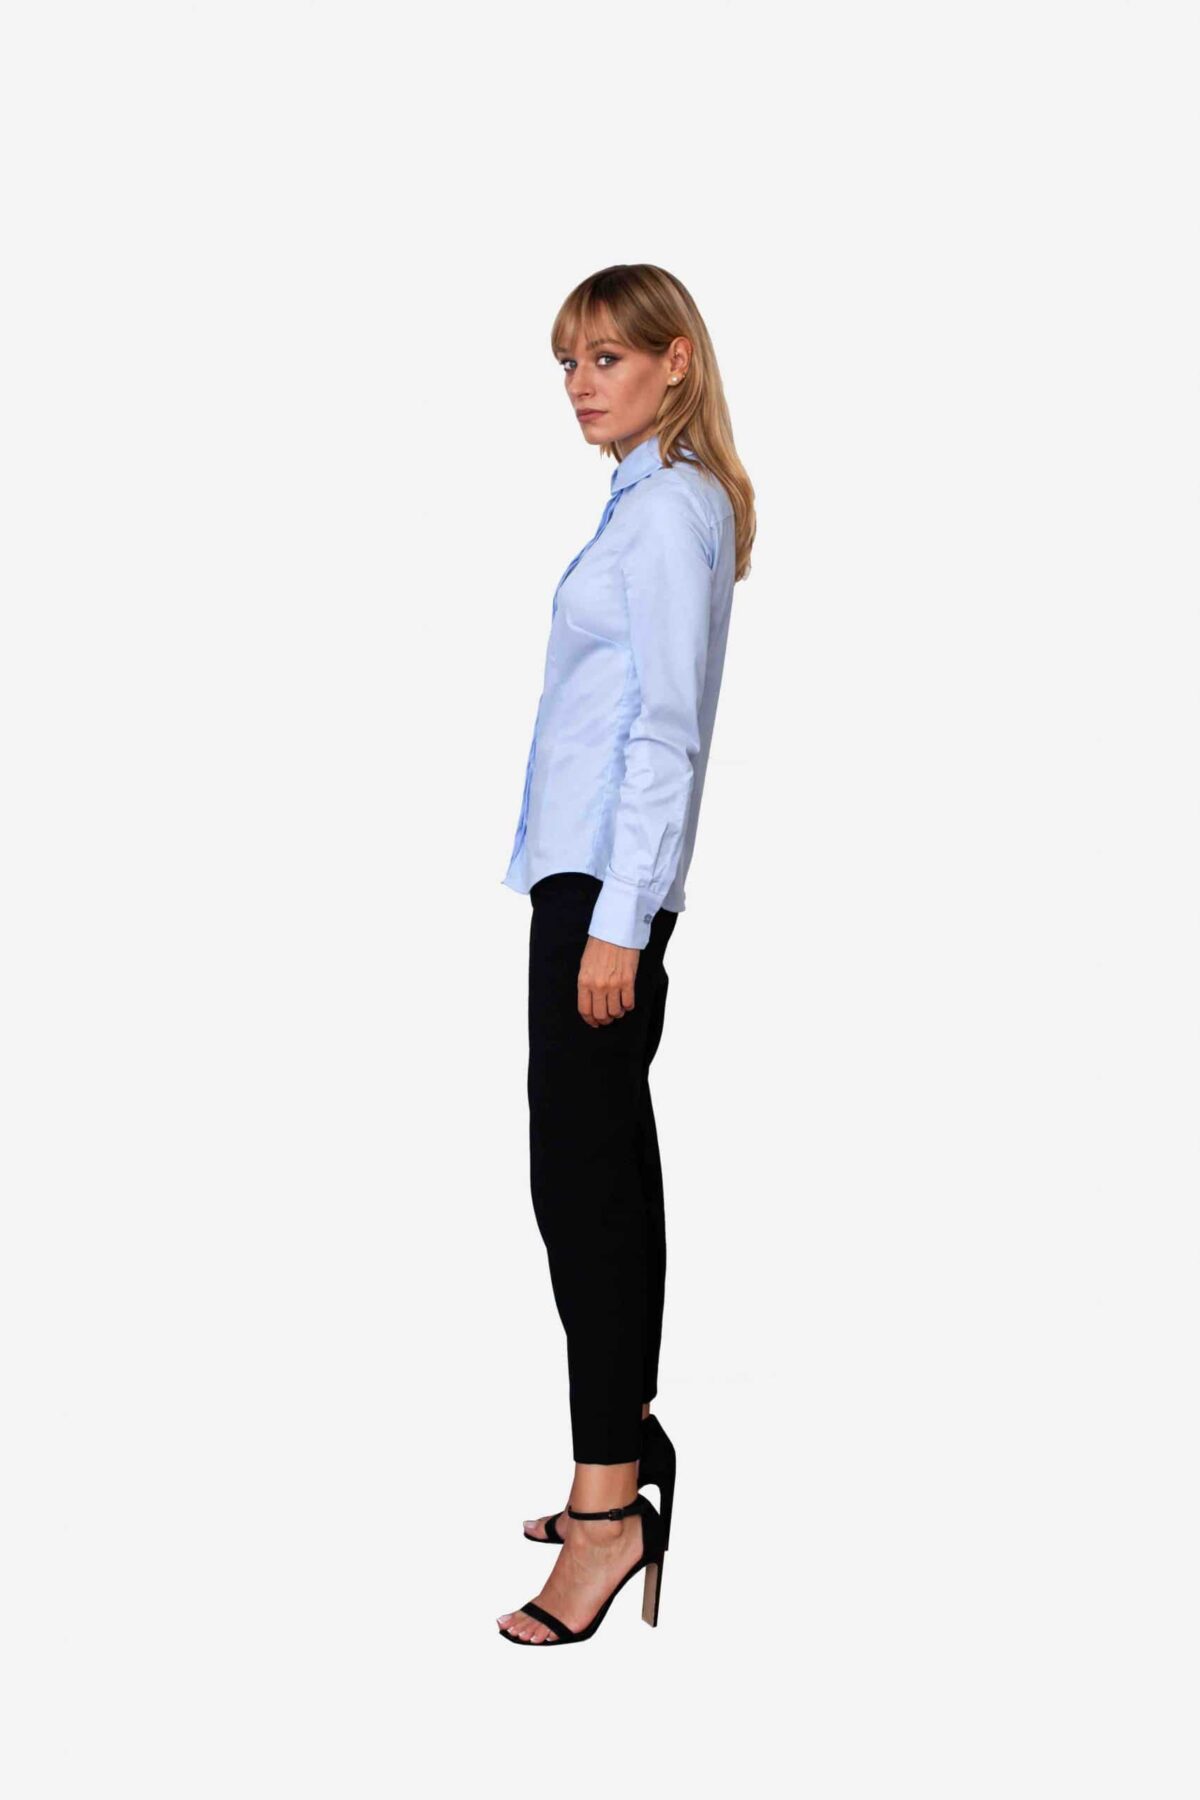 Bluse Ella von SANOGE. Klassische Business Bluse in blau mit New York Kent Kragen. Slim Fit, figurbetont. Made in Germany. Designer Label SANOGE